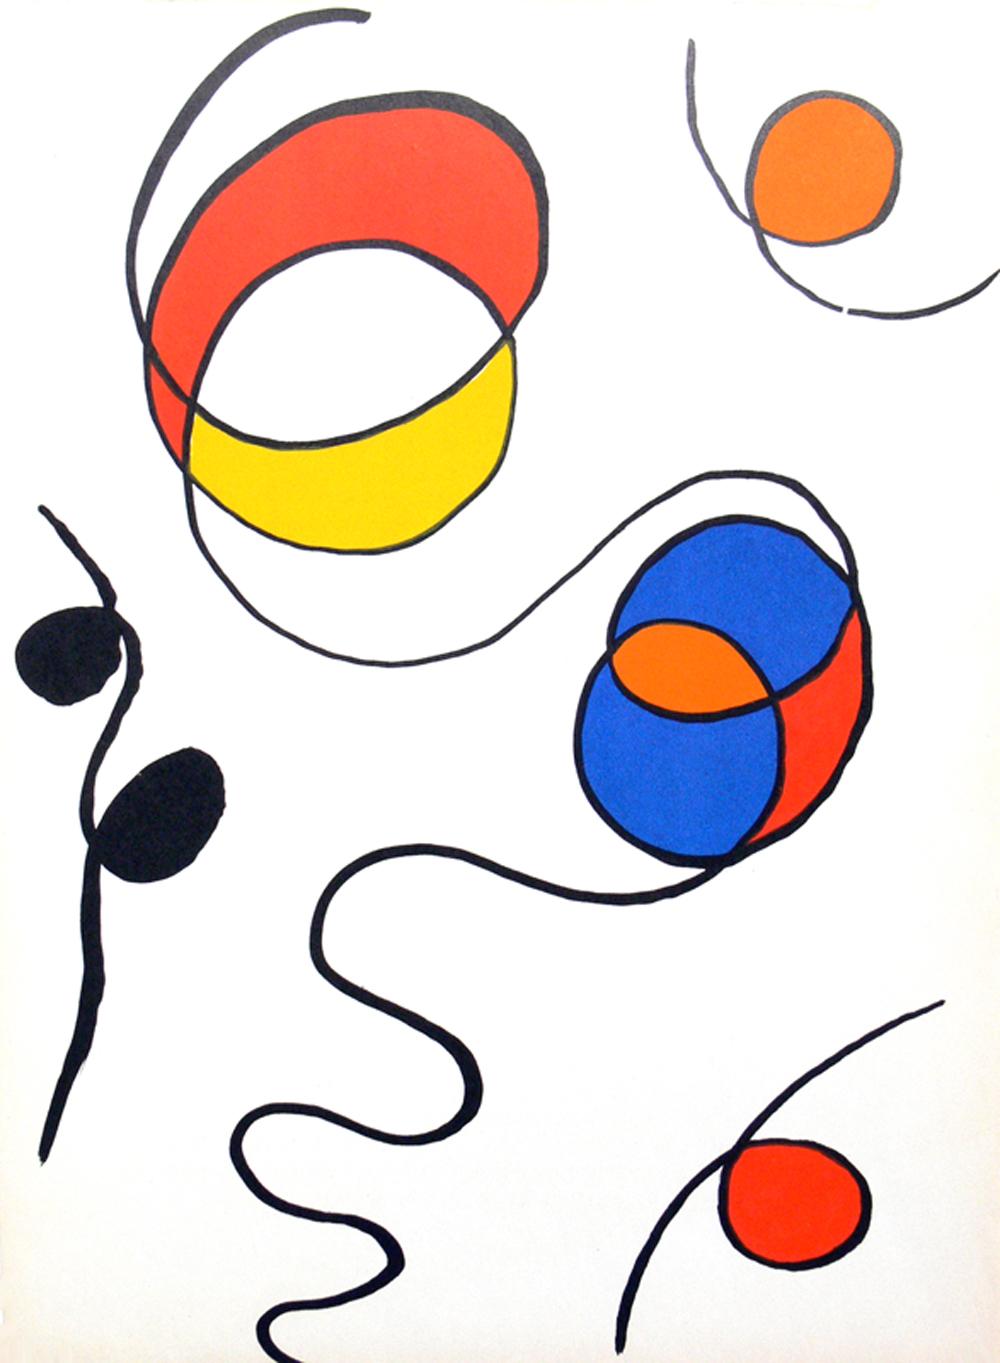 French Selection of Alexander Calder Lithographs